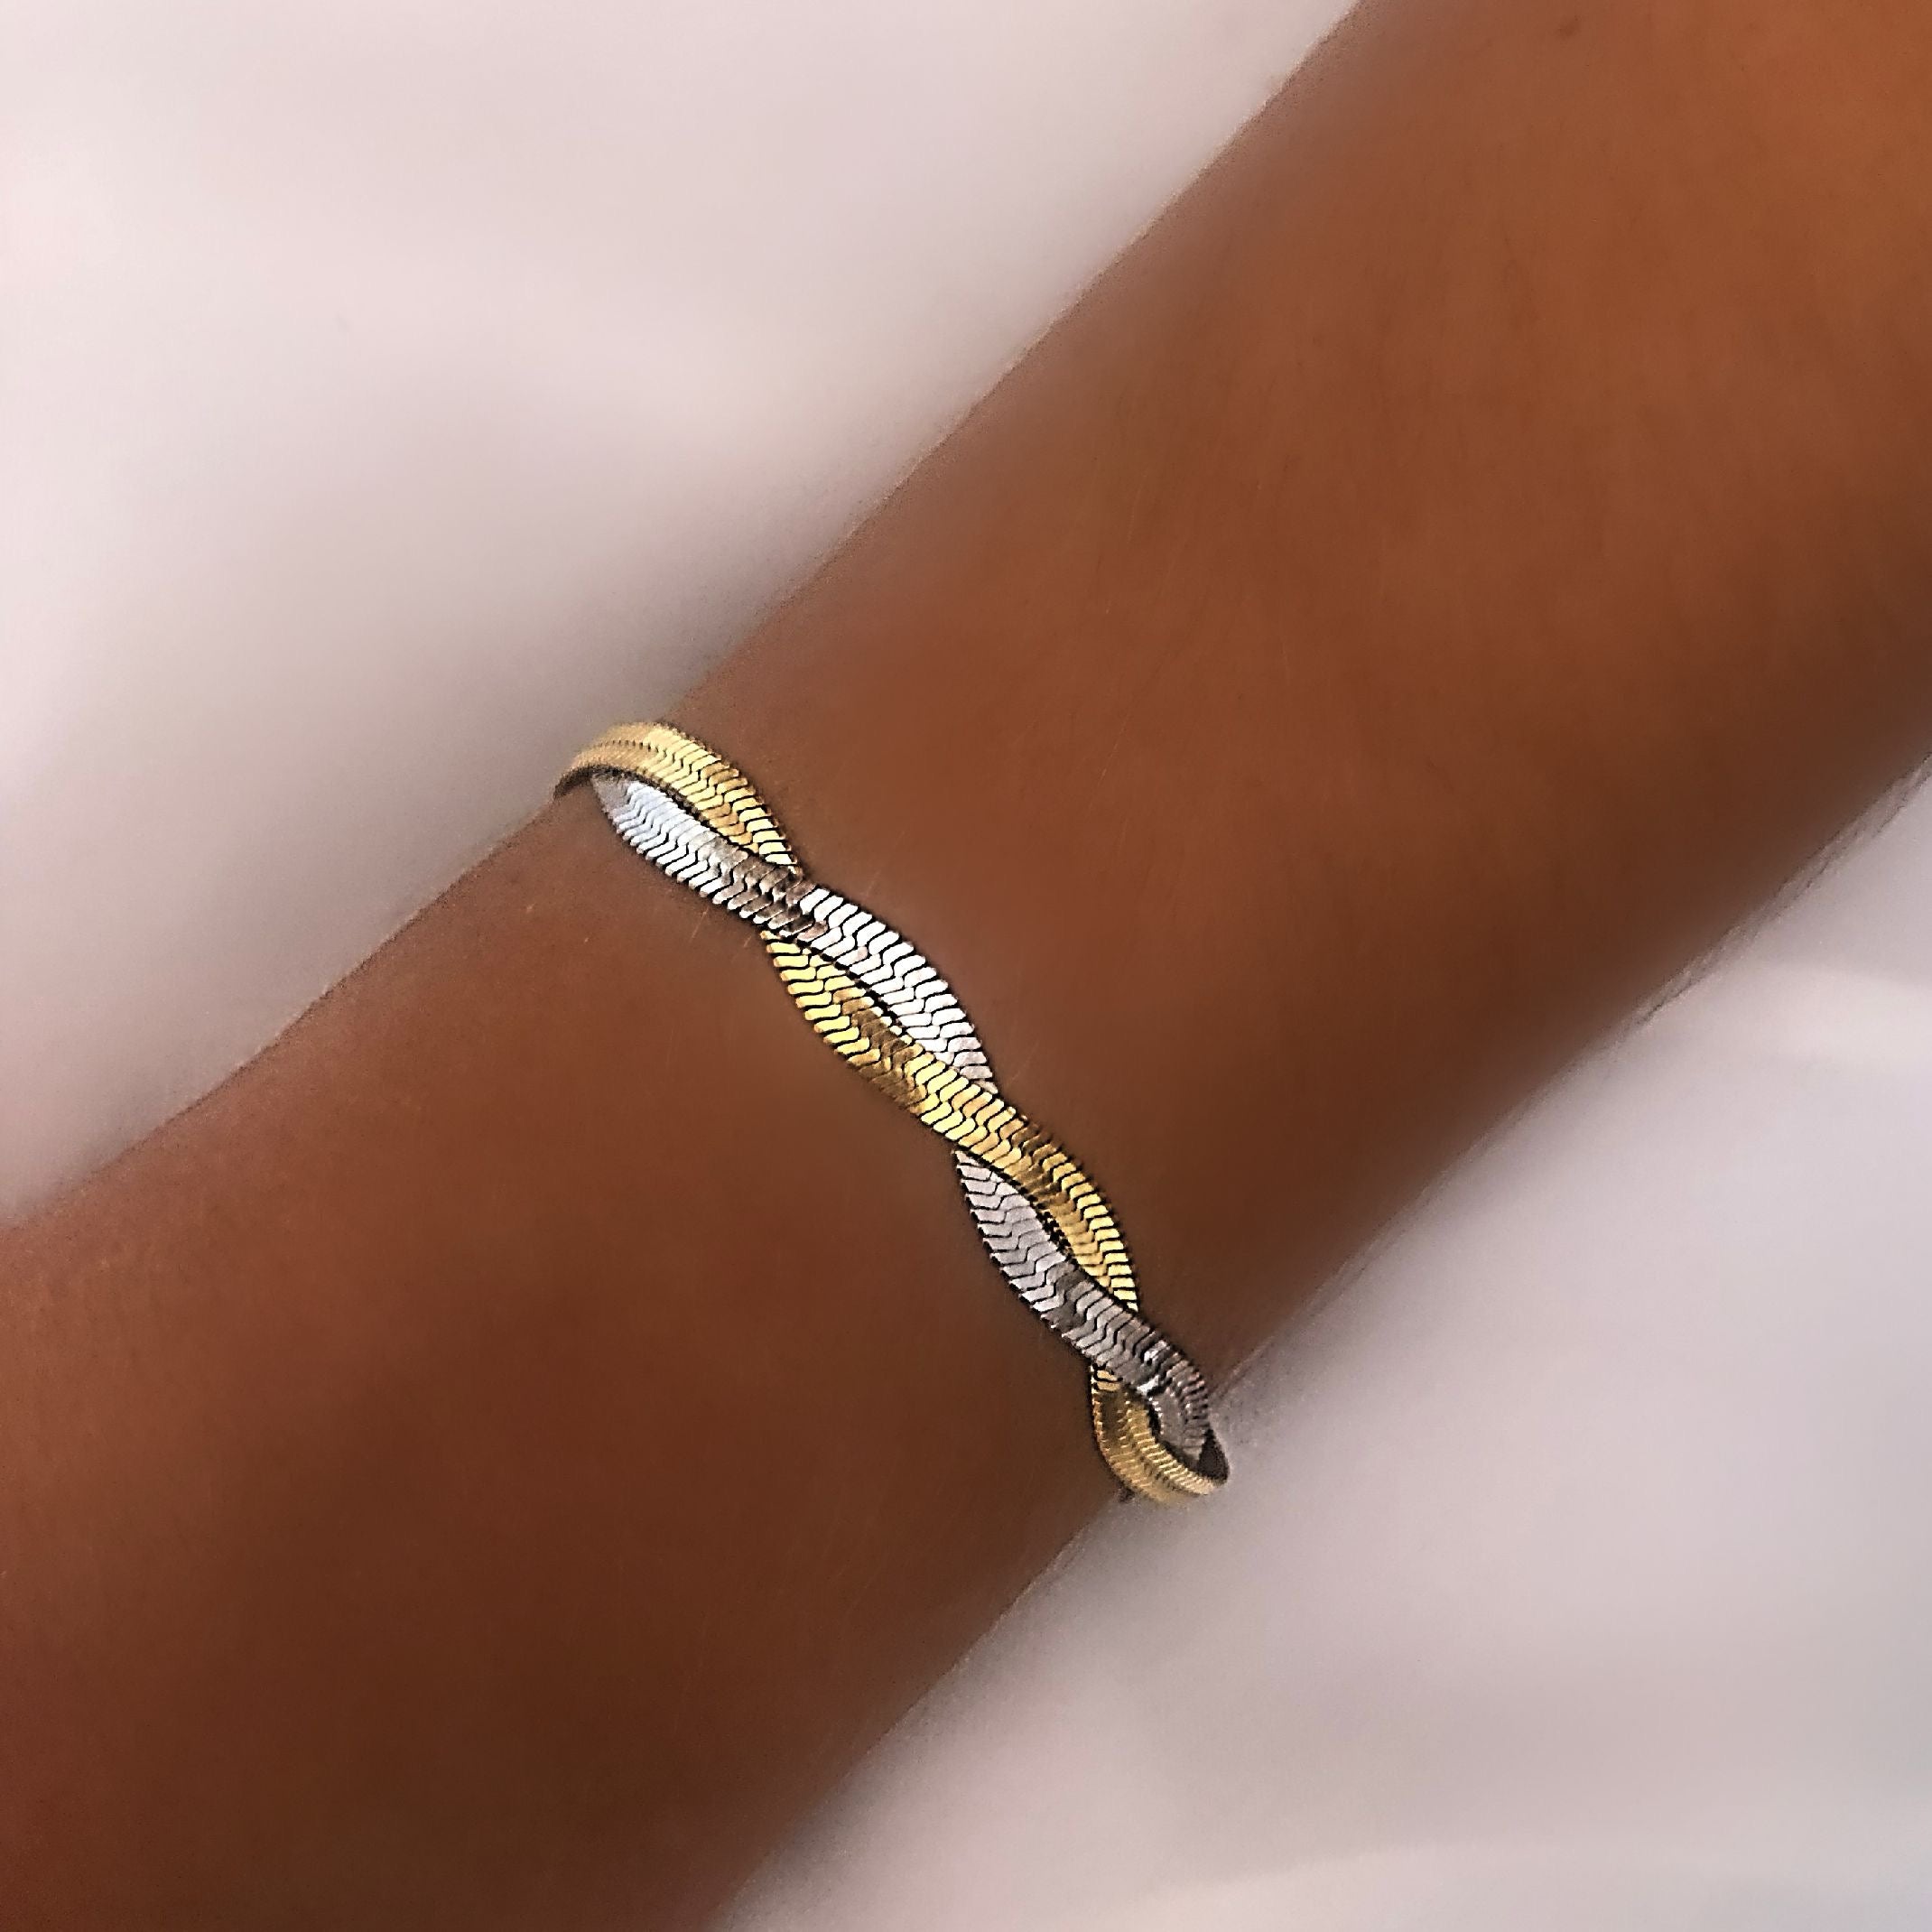 Gold and silver snakeskin bracelet 